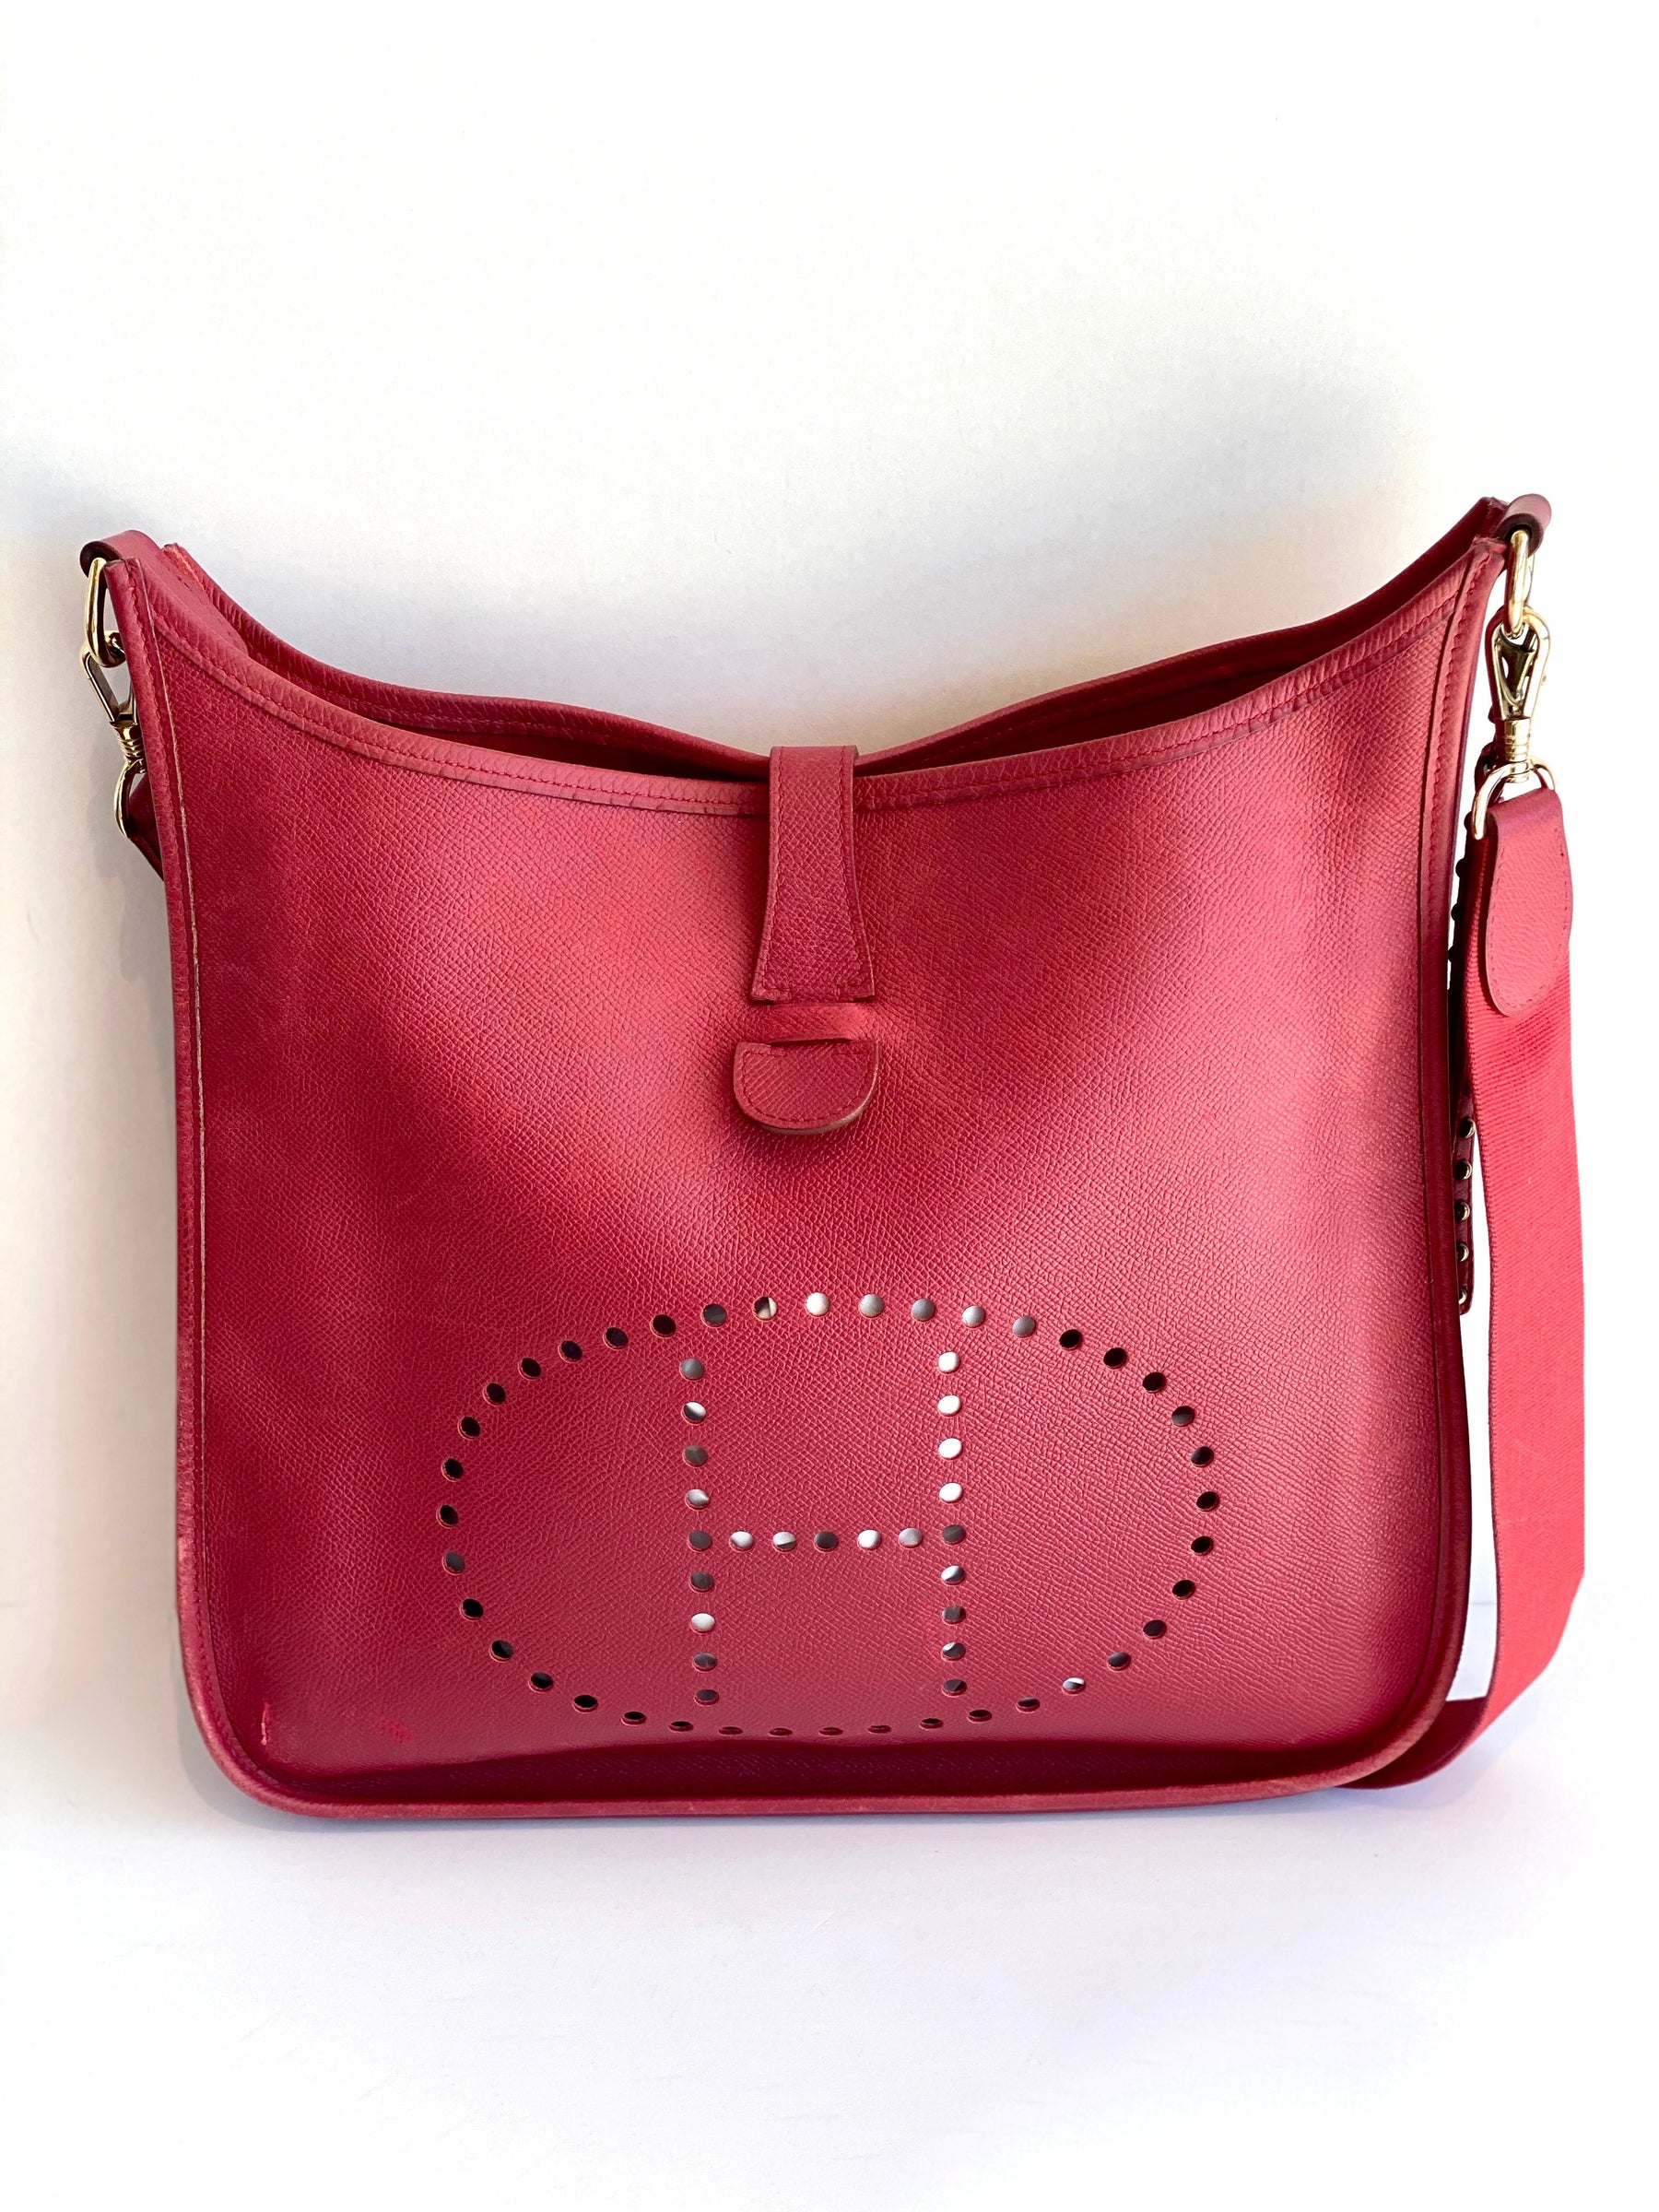 red leather hermes bag